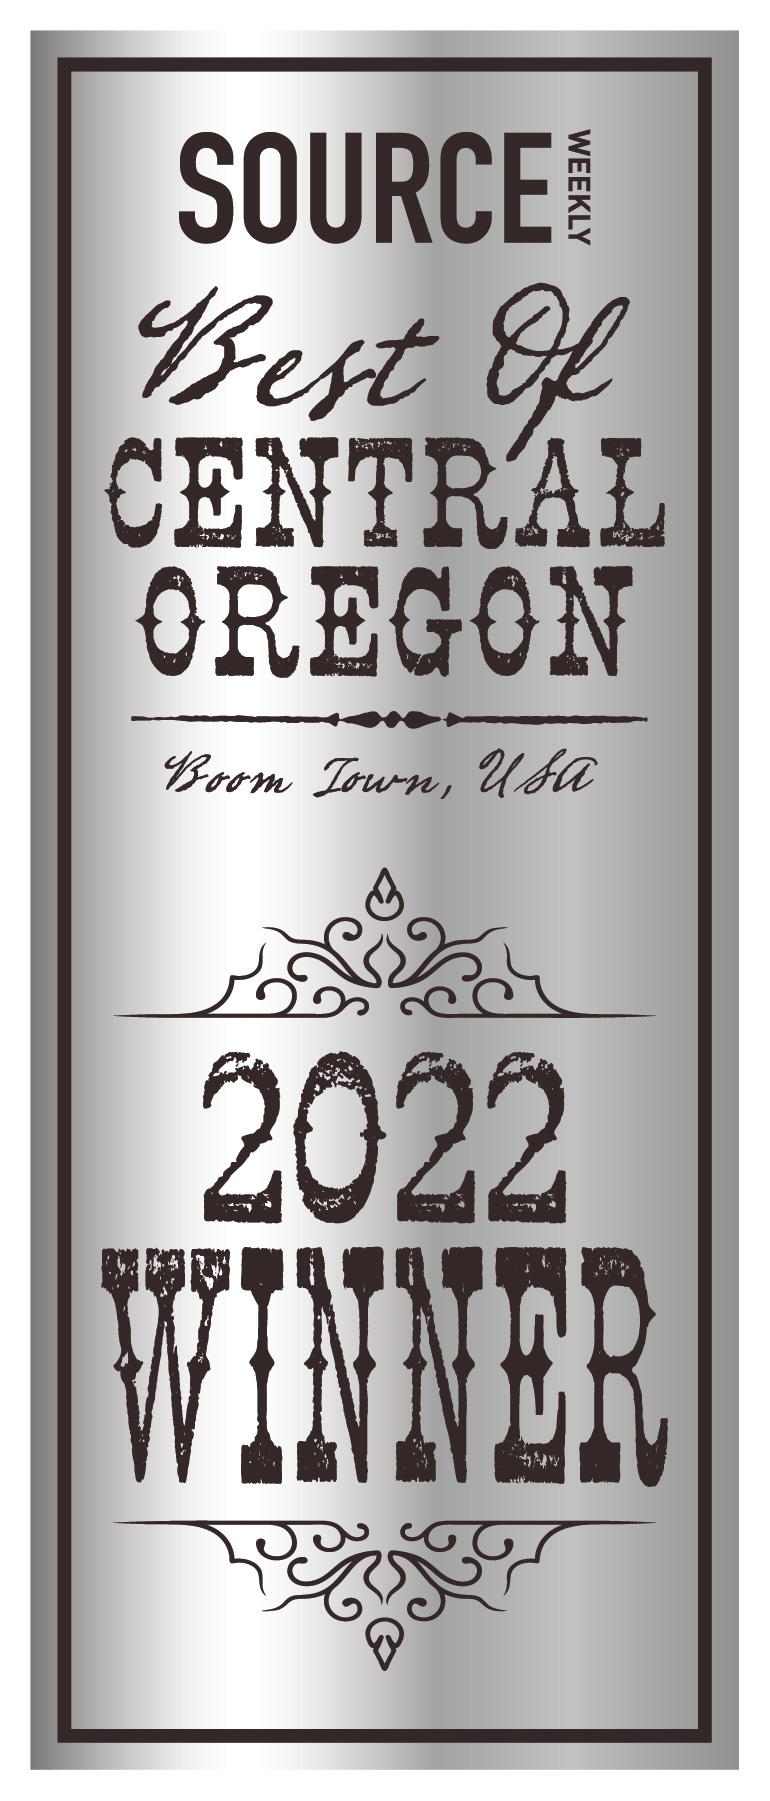 Best of Central Oregon Realtor 2022 Winner